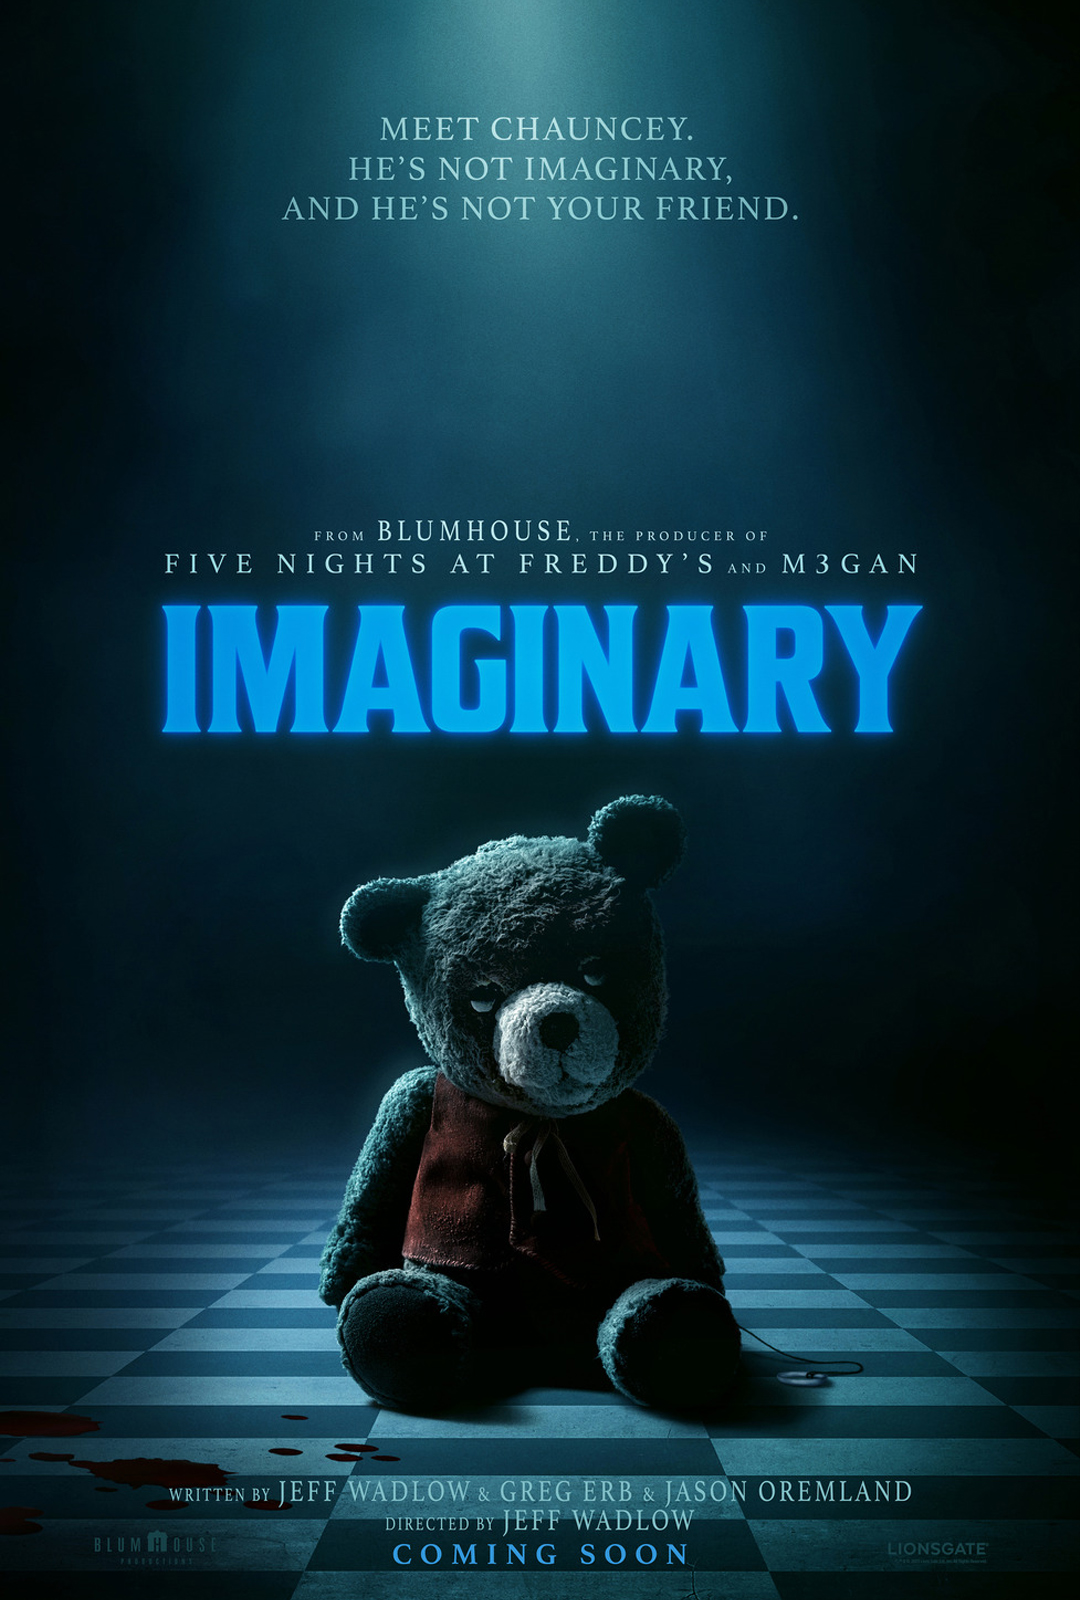 Movie Poster: Imaginary